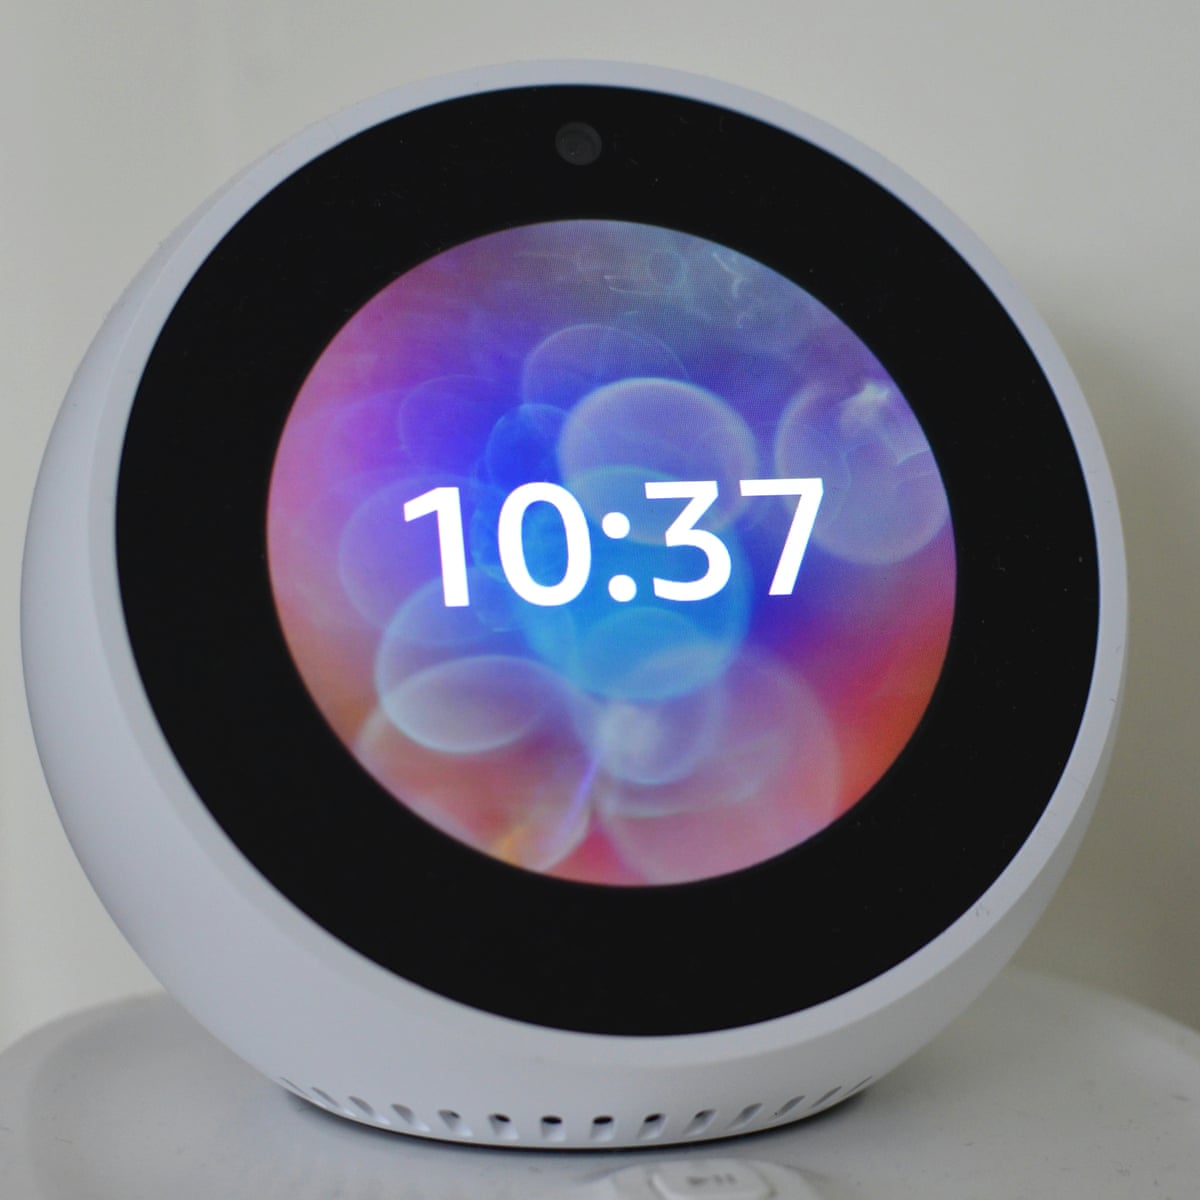 Echo Spot review: cute smart speaker with a screen